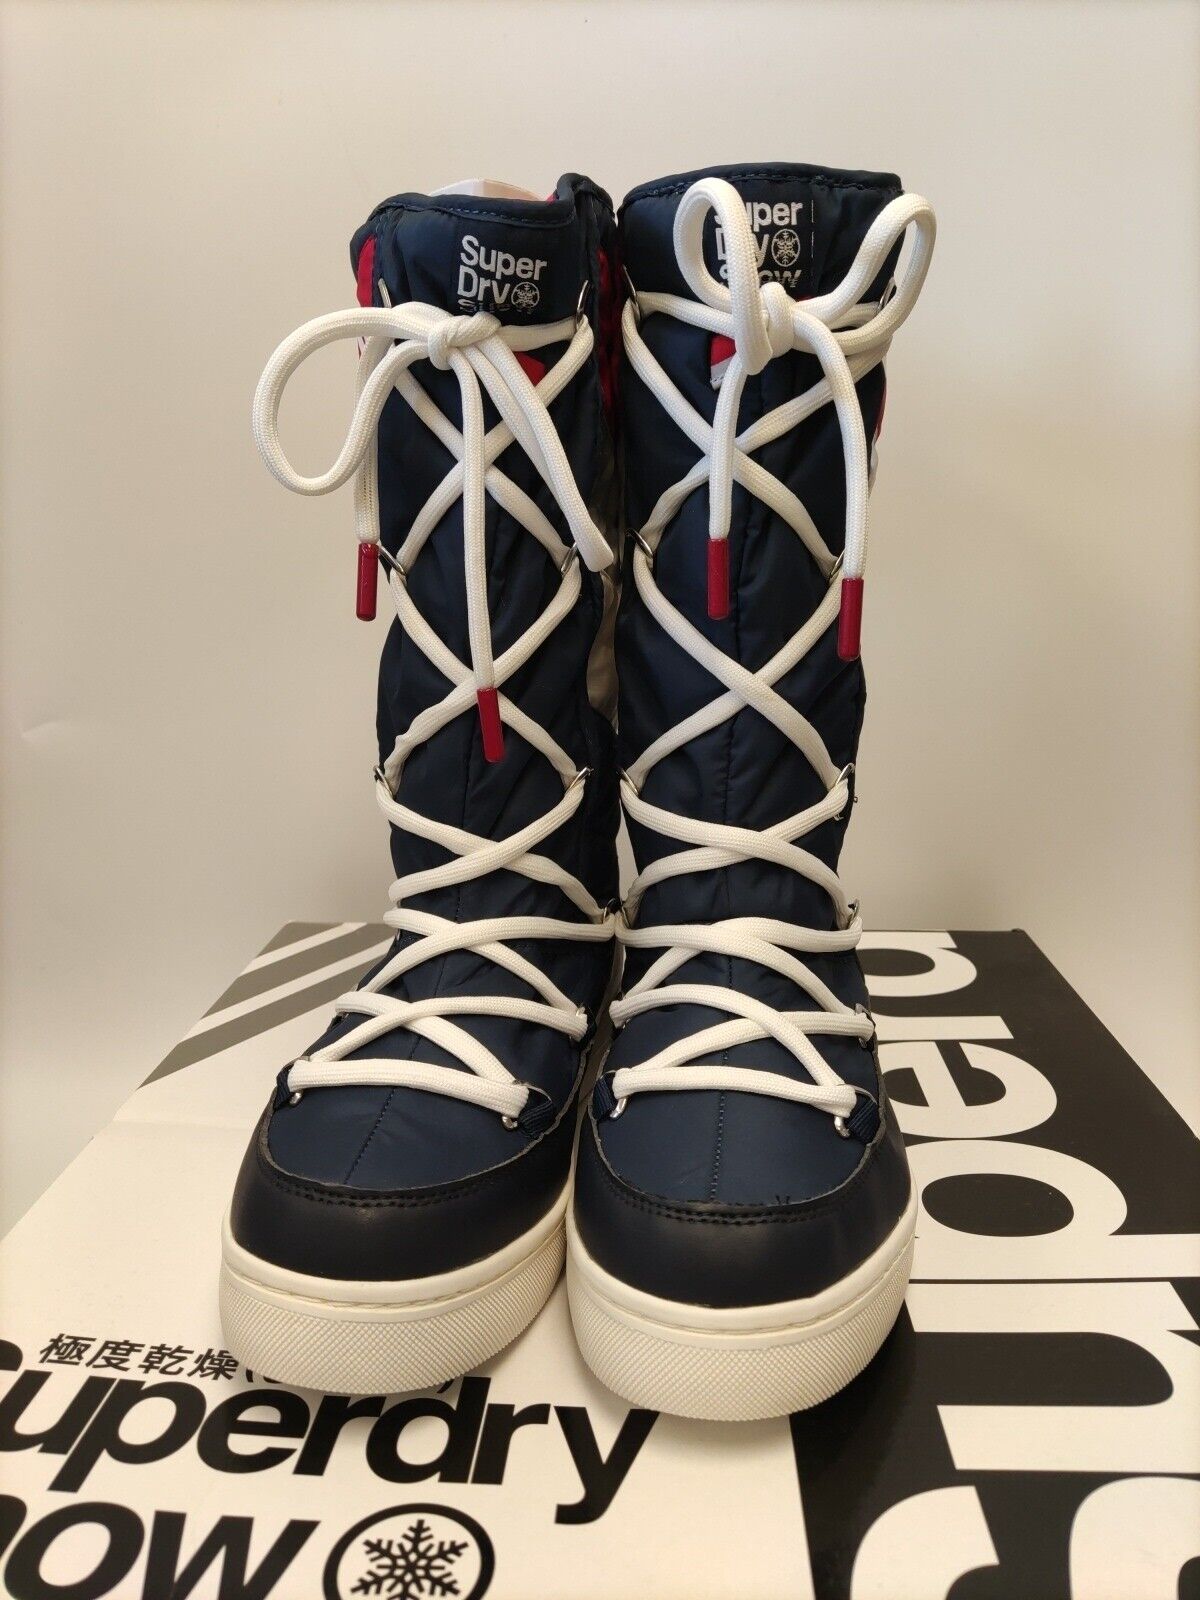 Superdry Chamonix Snow Boots. Womens. UK 6.